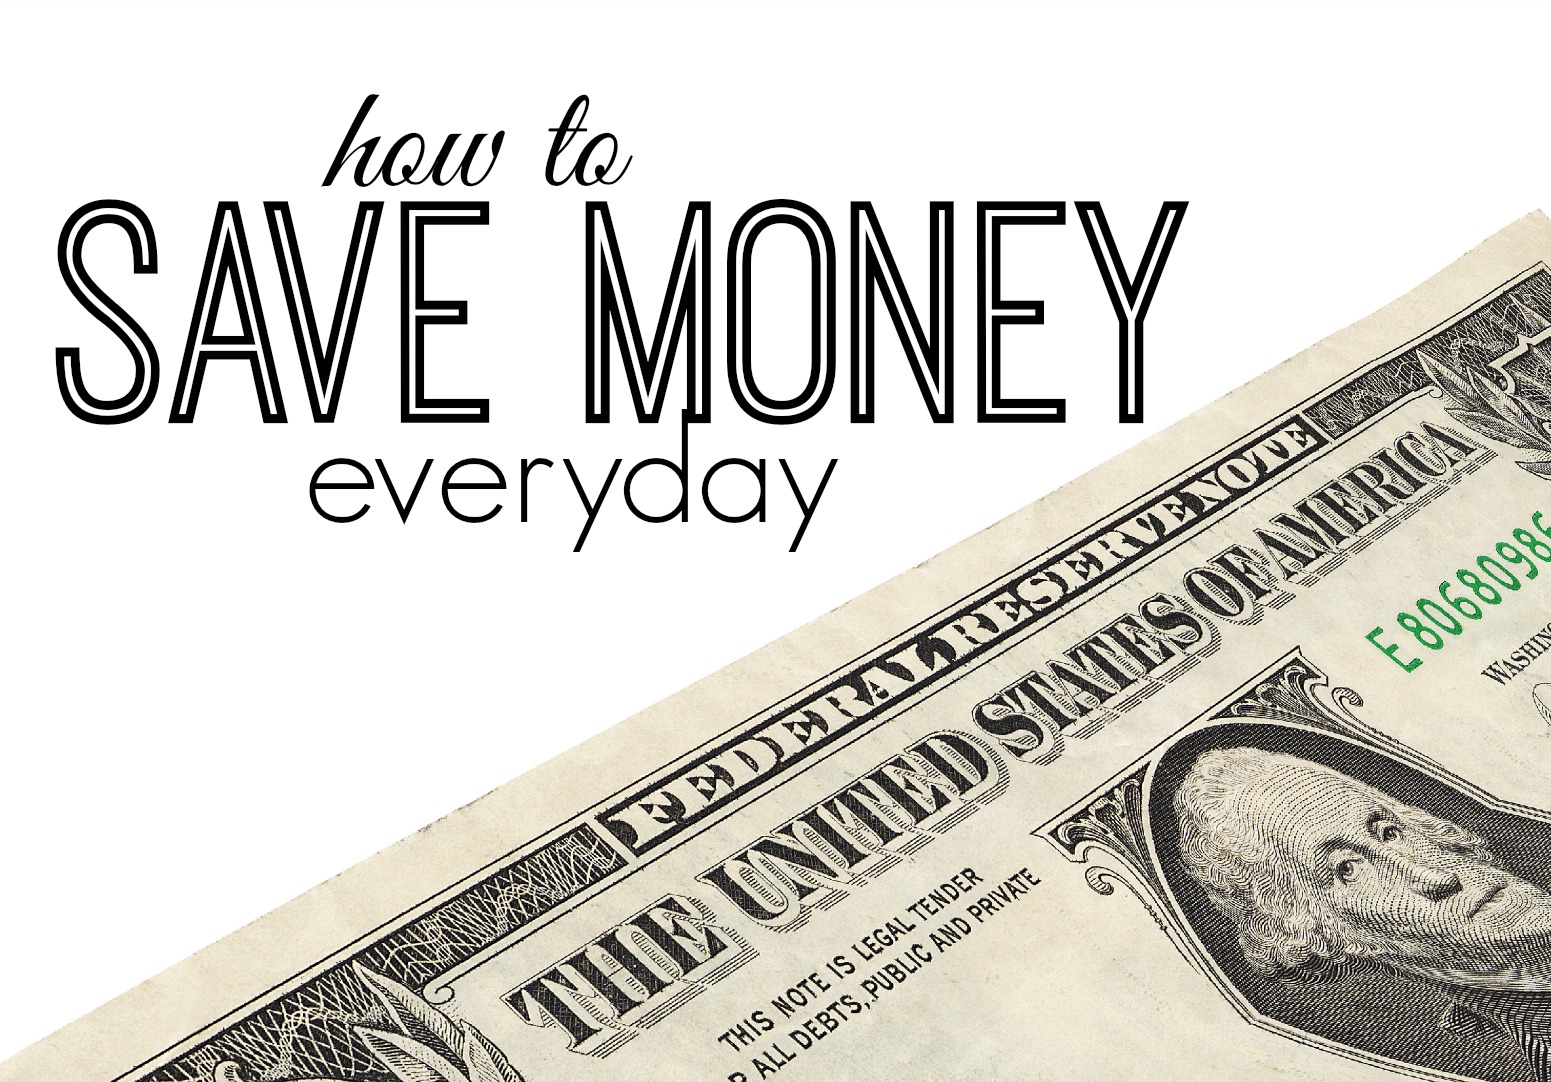 How-to-save-money-everyday-2